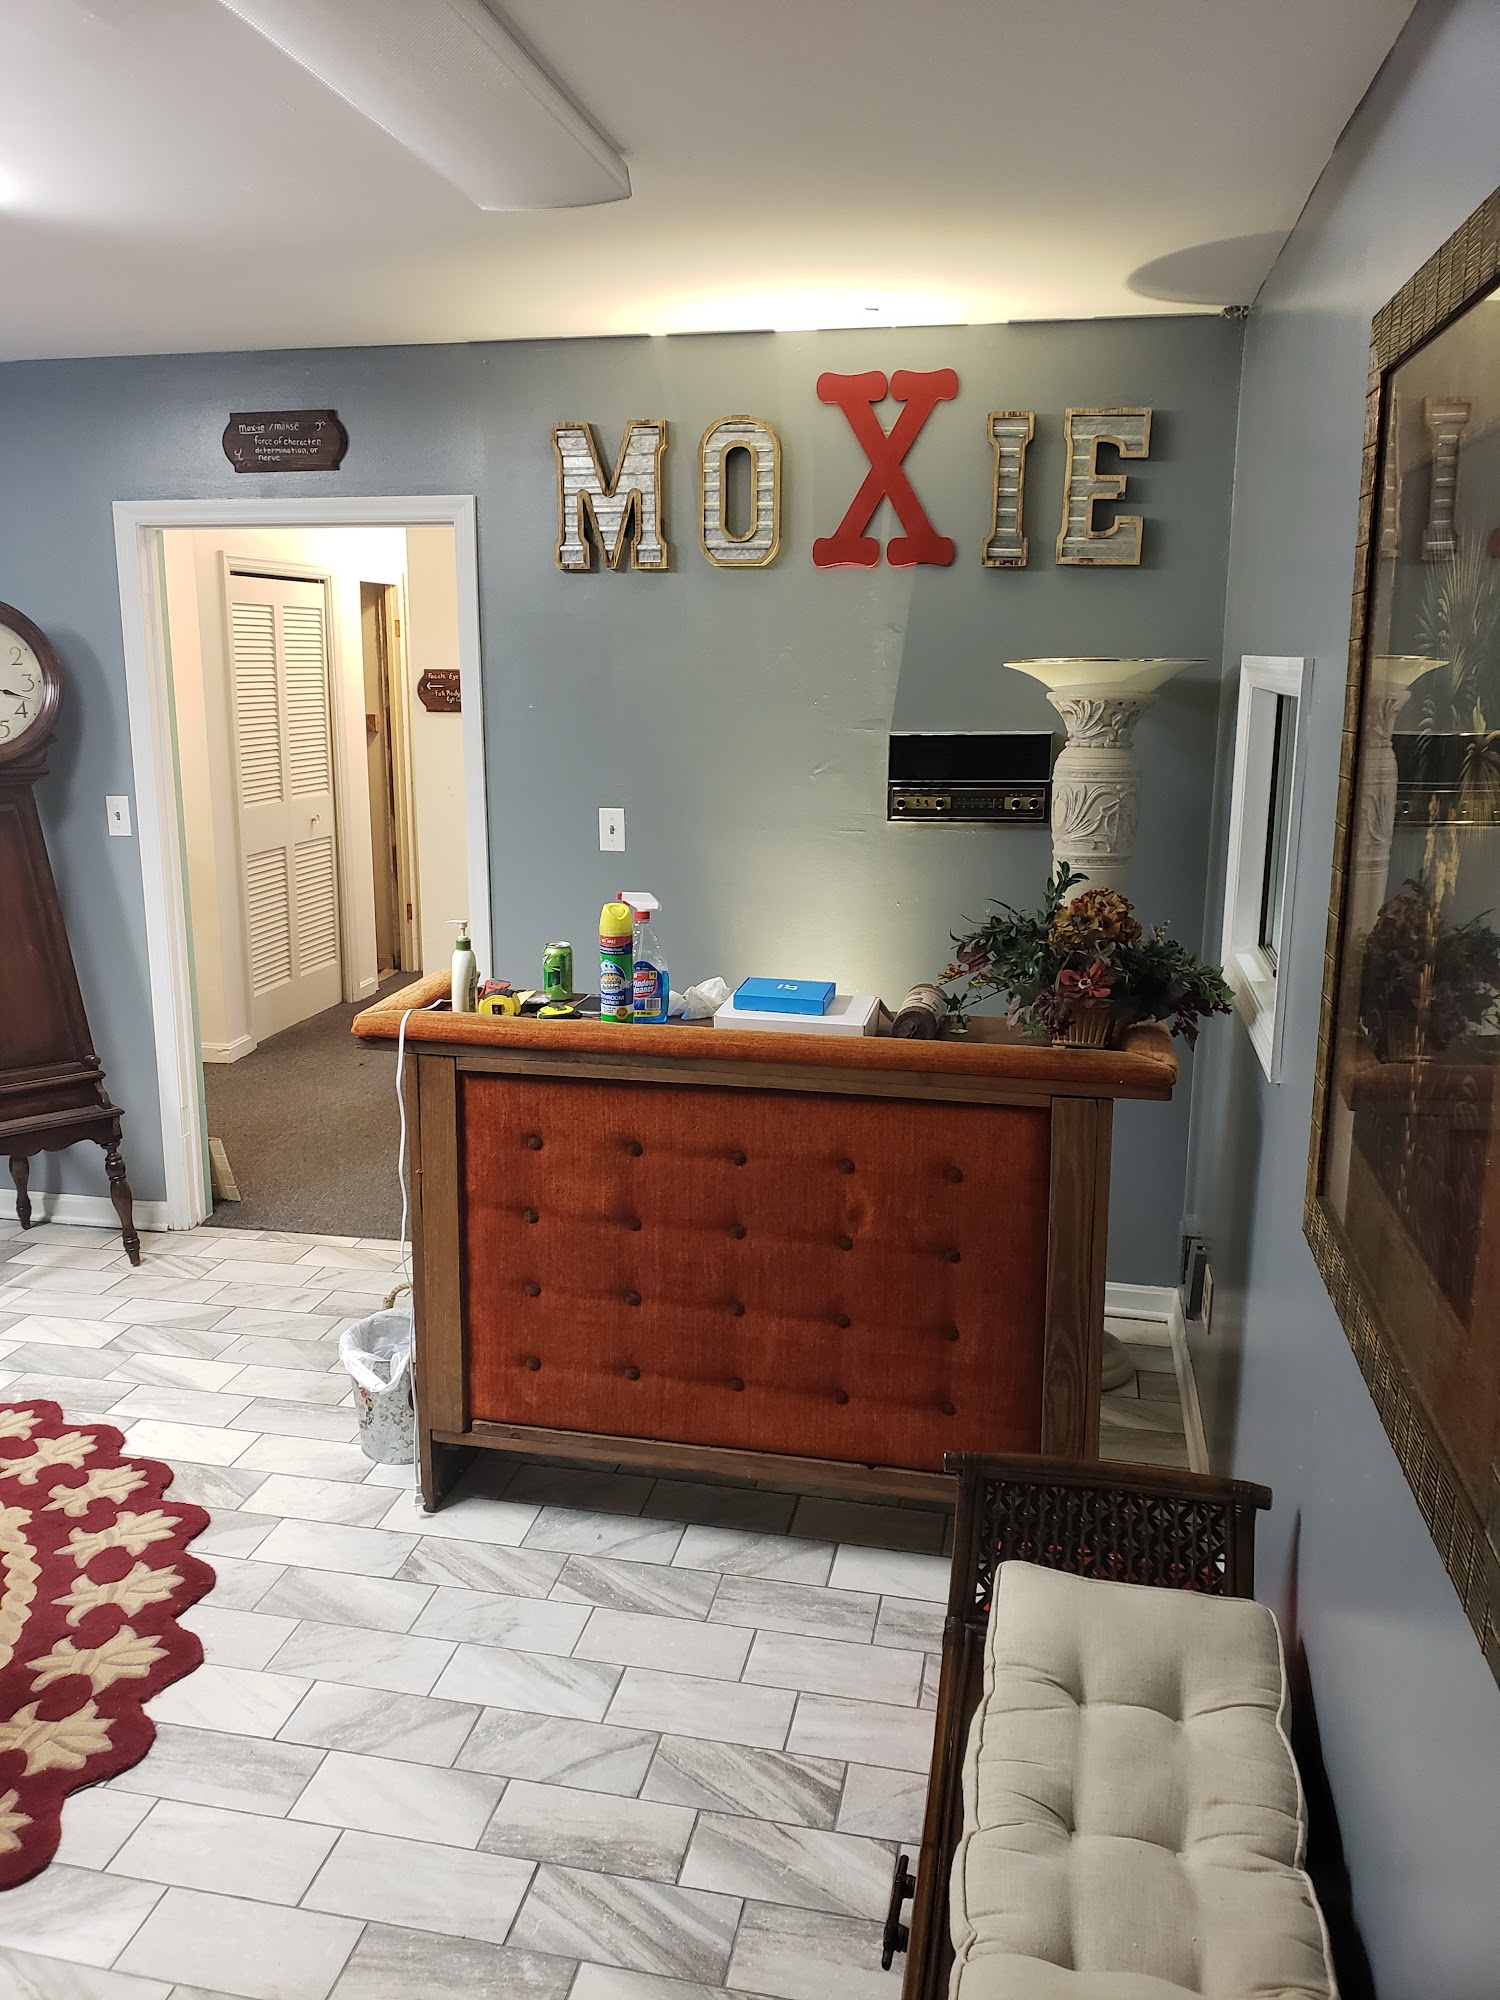 Moxie House of Hair Salon & Spa